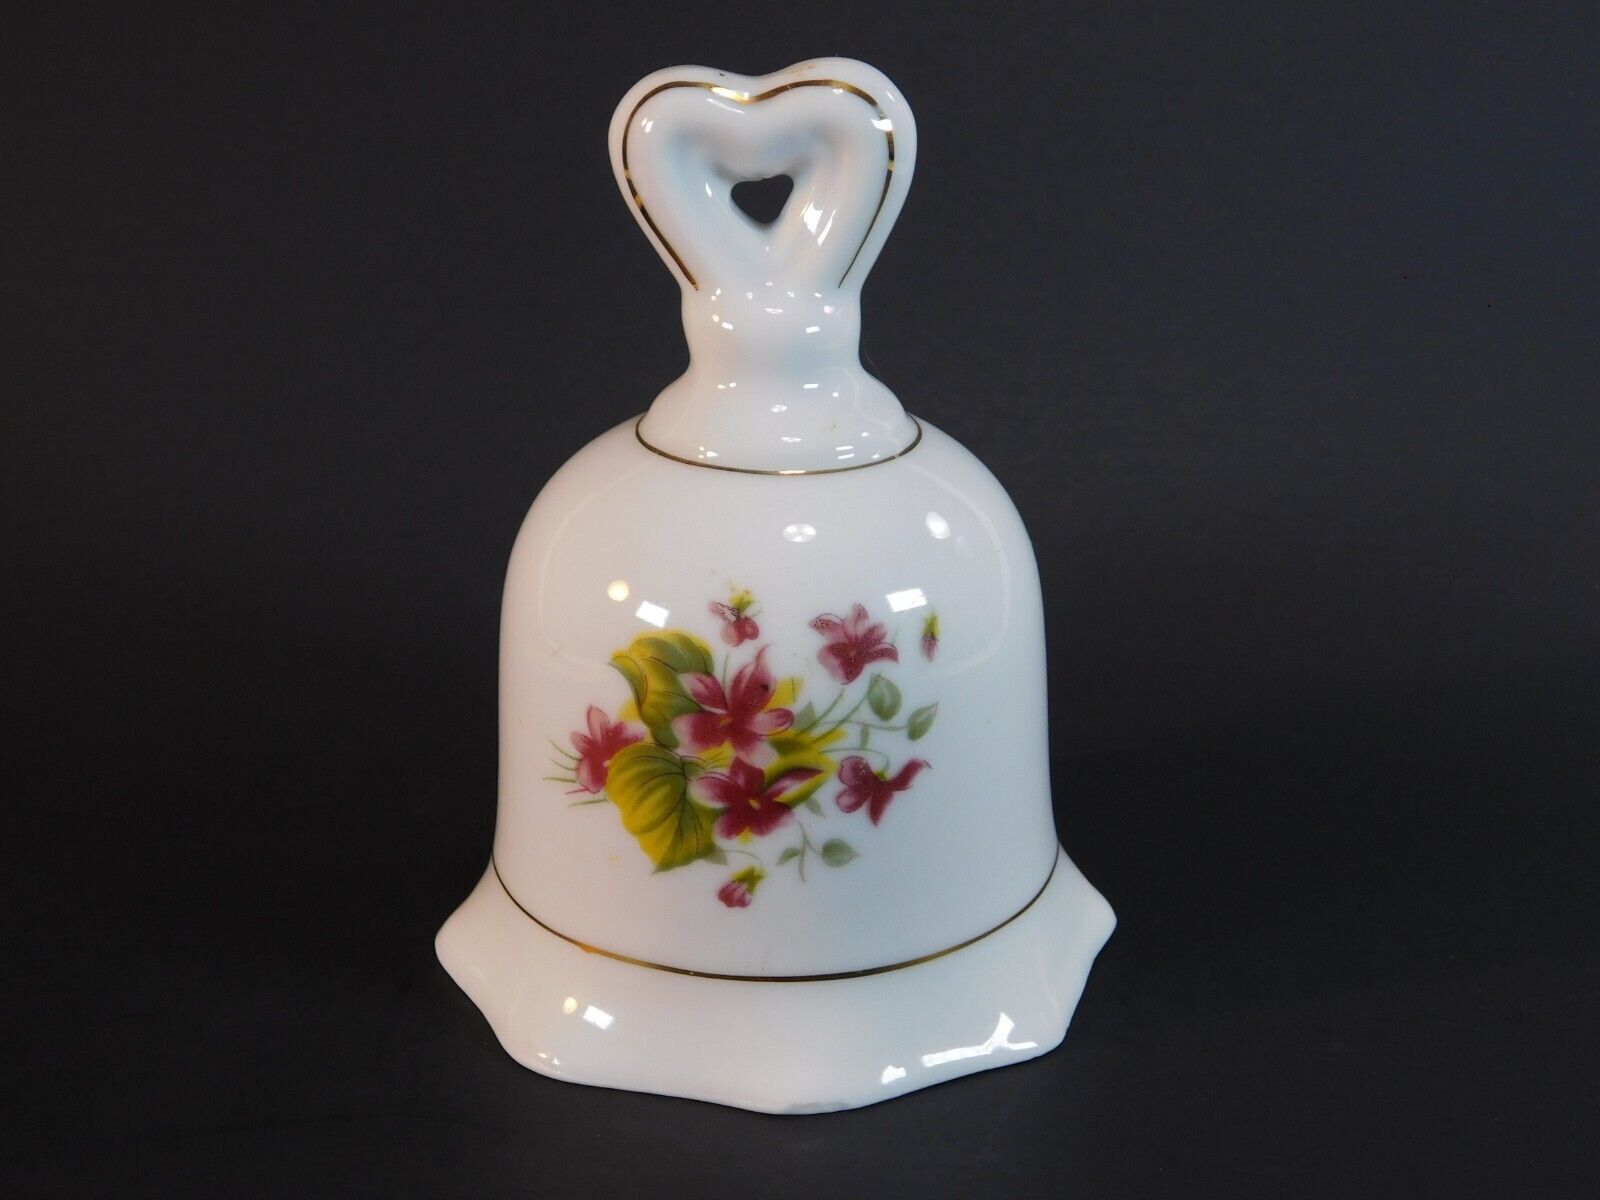 Enesco White Porcelain Bell Painted Floral Heart Shape Handle Ceramic Clapper